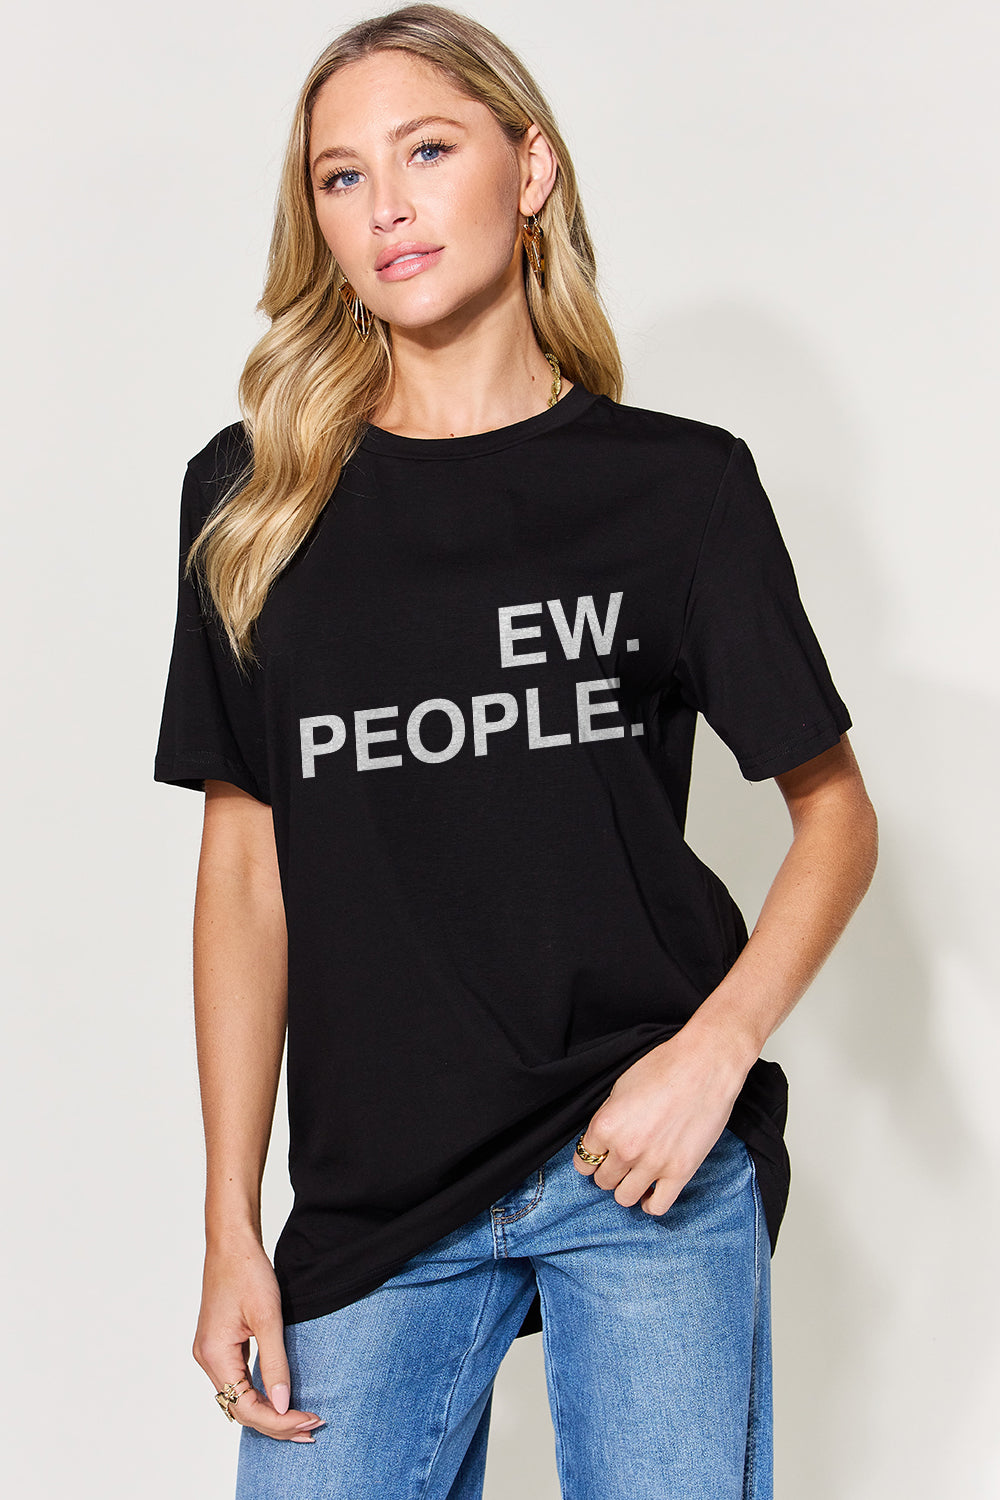 EW PEOPLE Graphic Round Neck T-Shirt - Sydney So Sweet